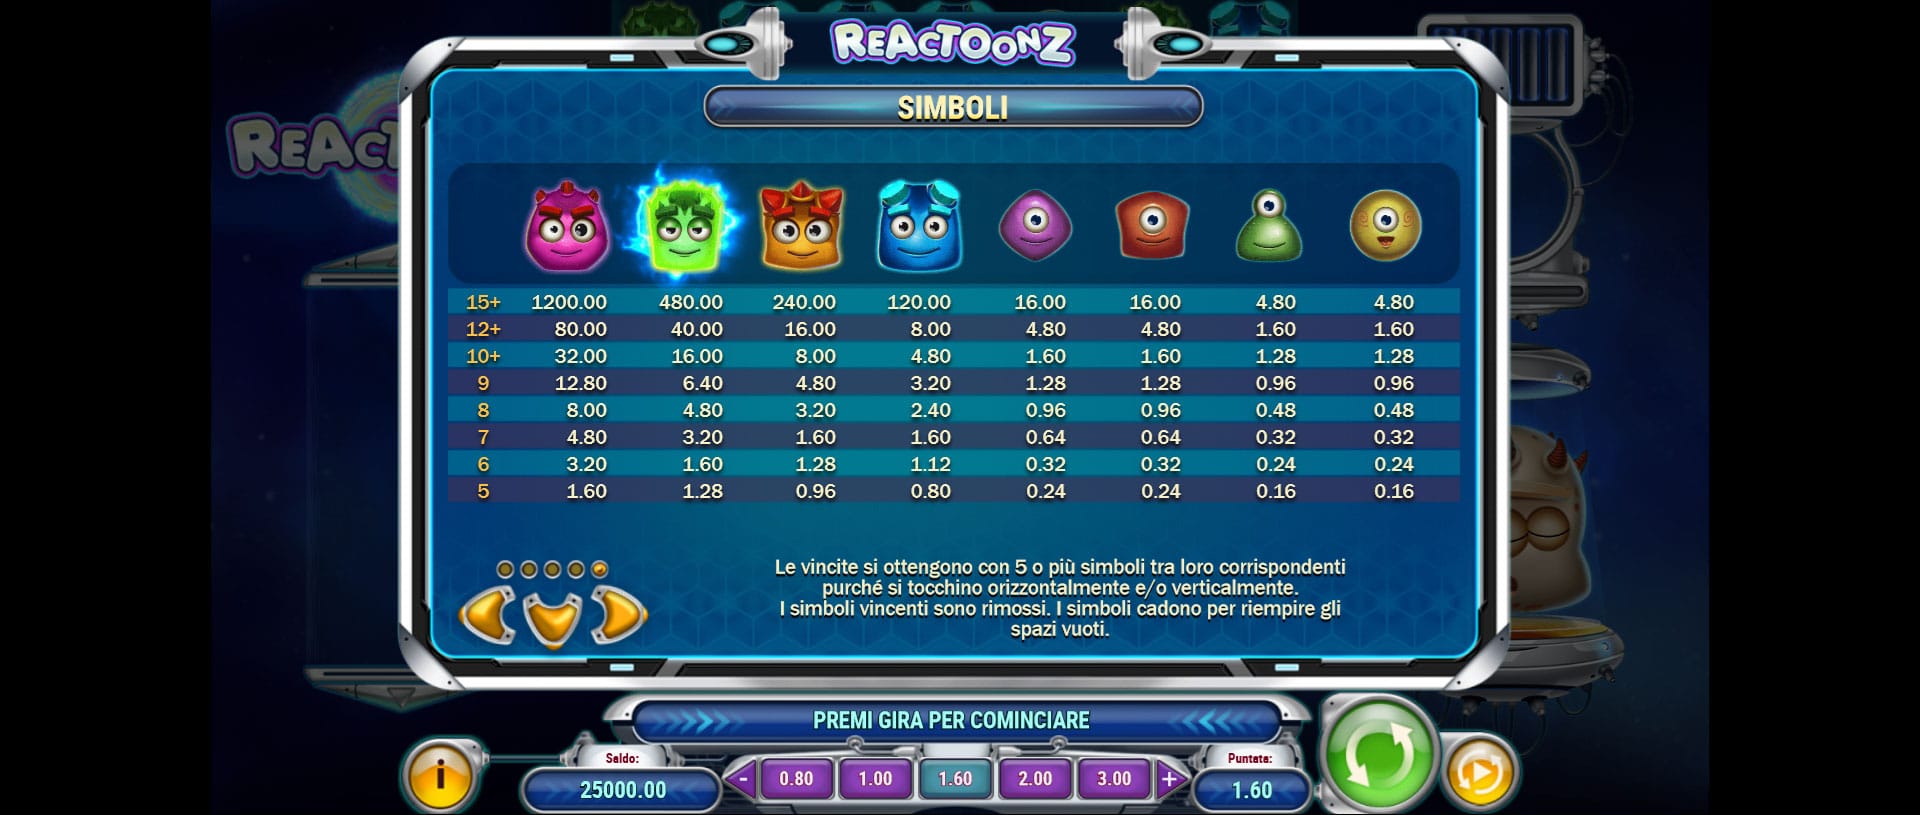 tabella dei simboli della slot machine reactoonz